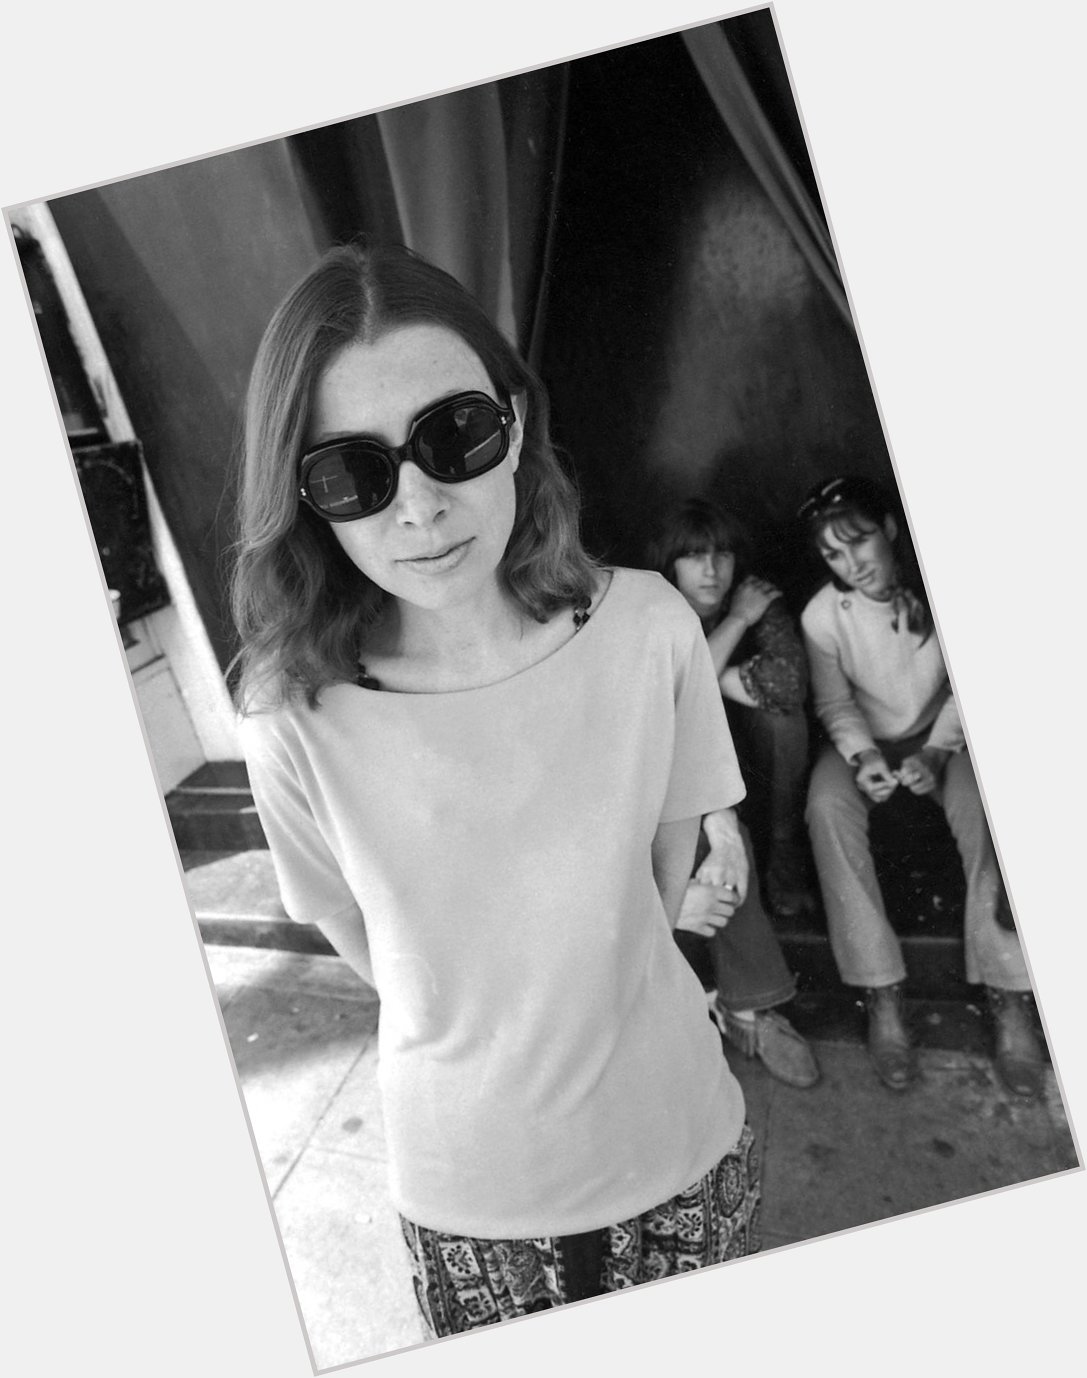 Aesthetic: Joan Didion s sunglasses

happy birthday to this literary genius 